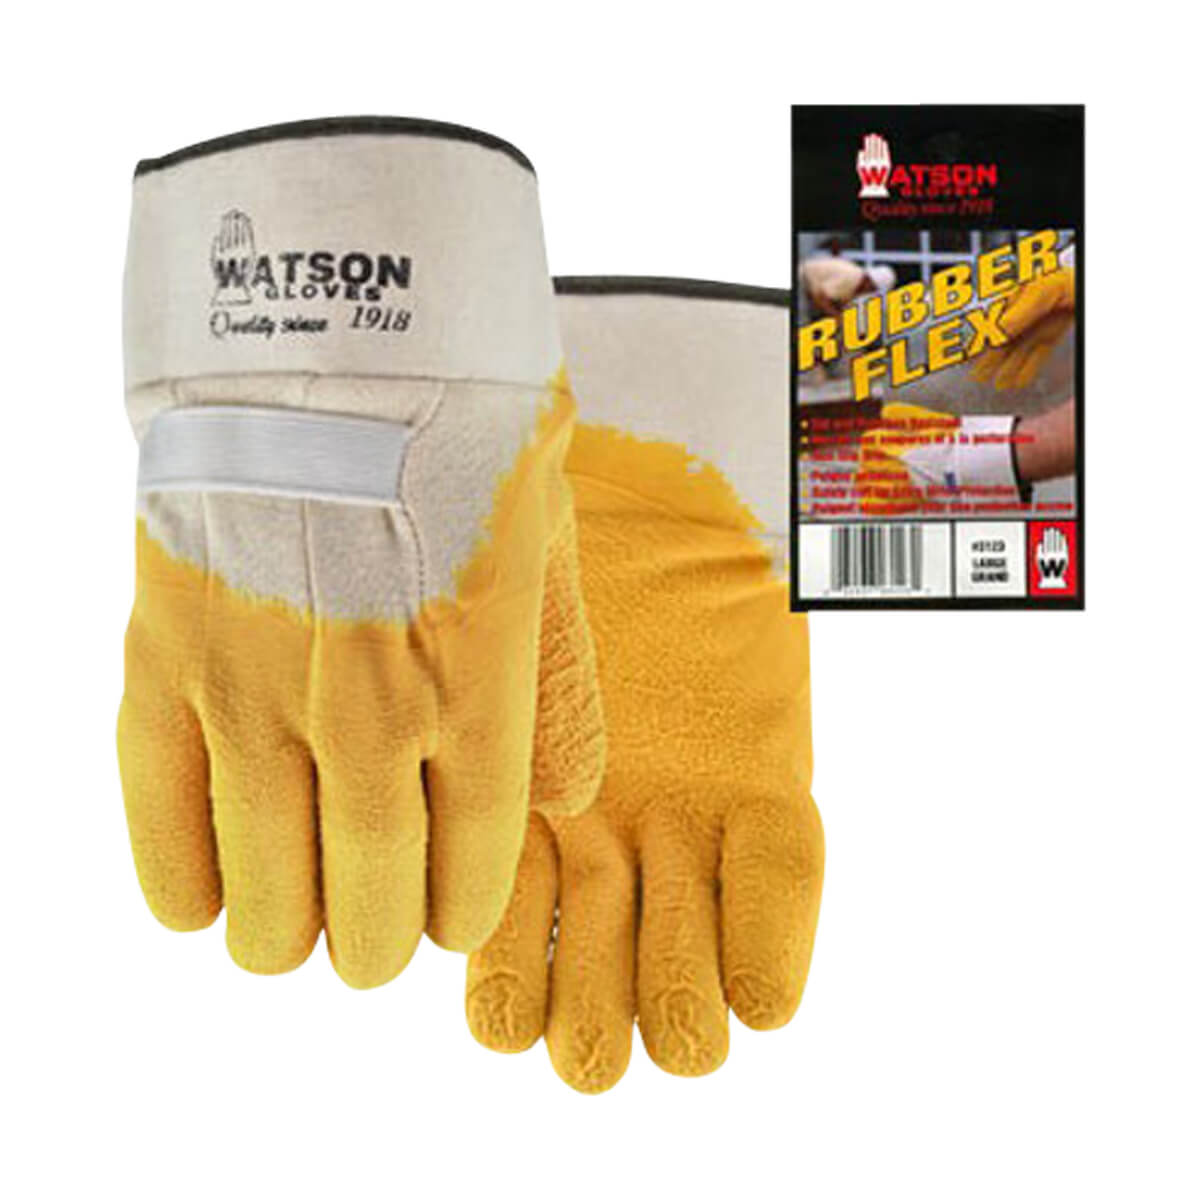 Watson Rubber Flex Gloves